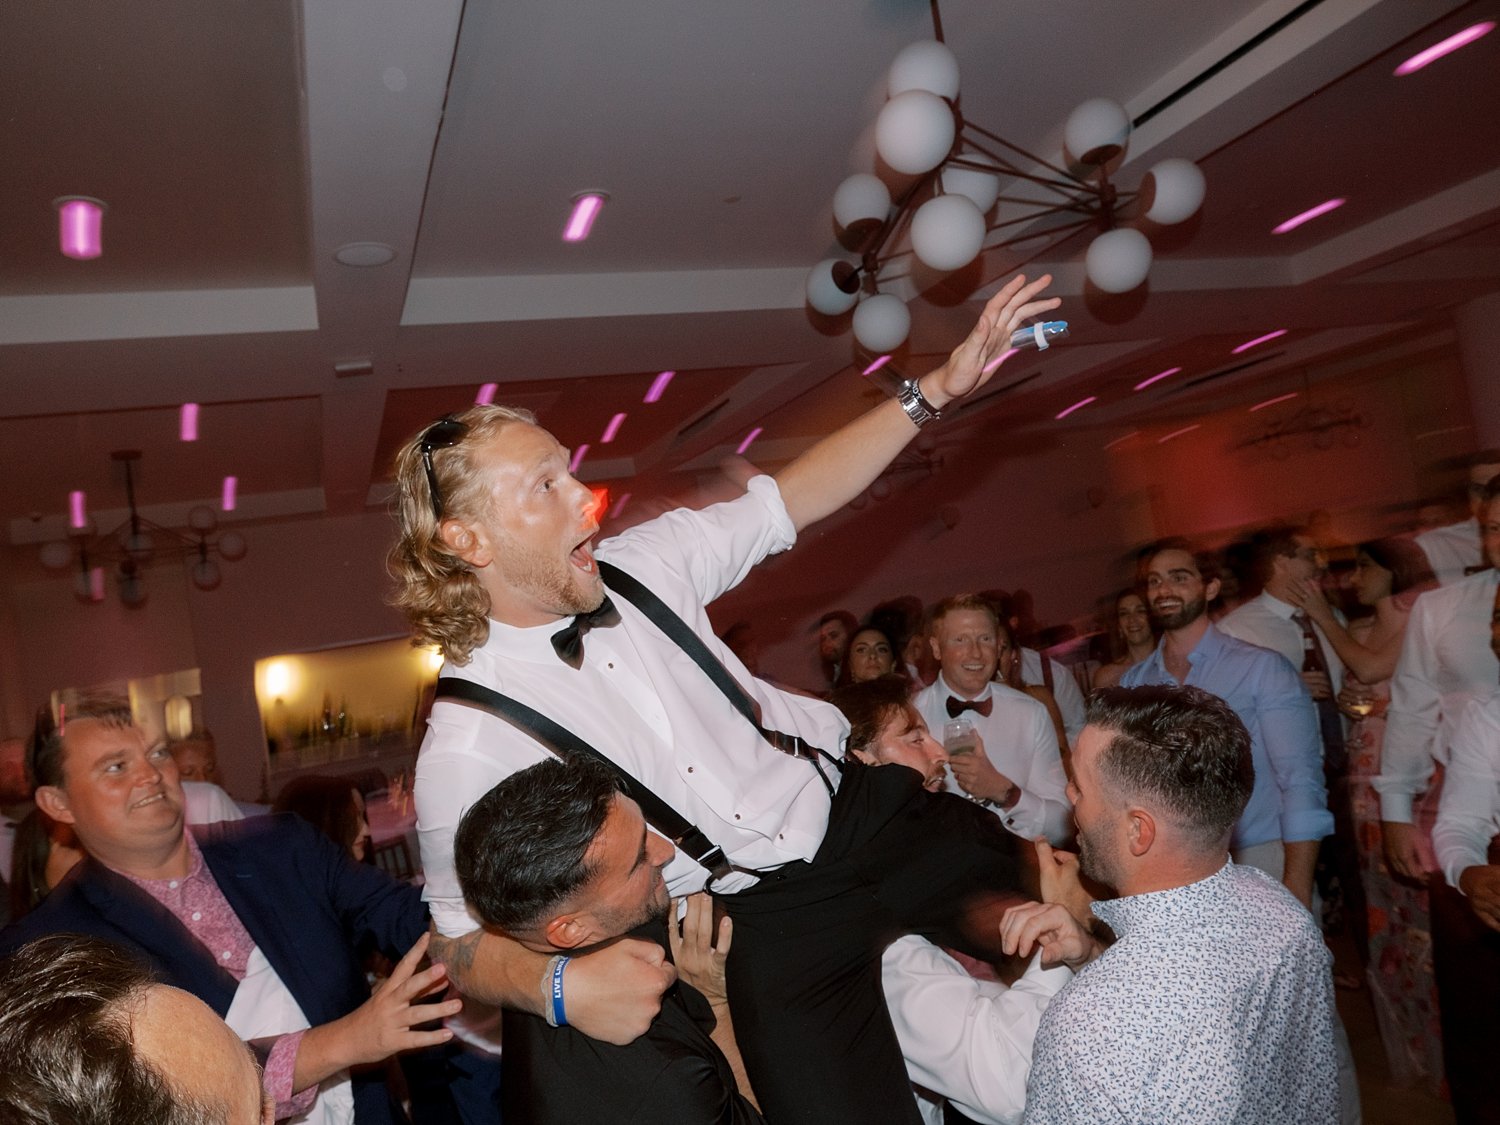 groomsmen lift up groomsman during Long Island beach wedding reception